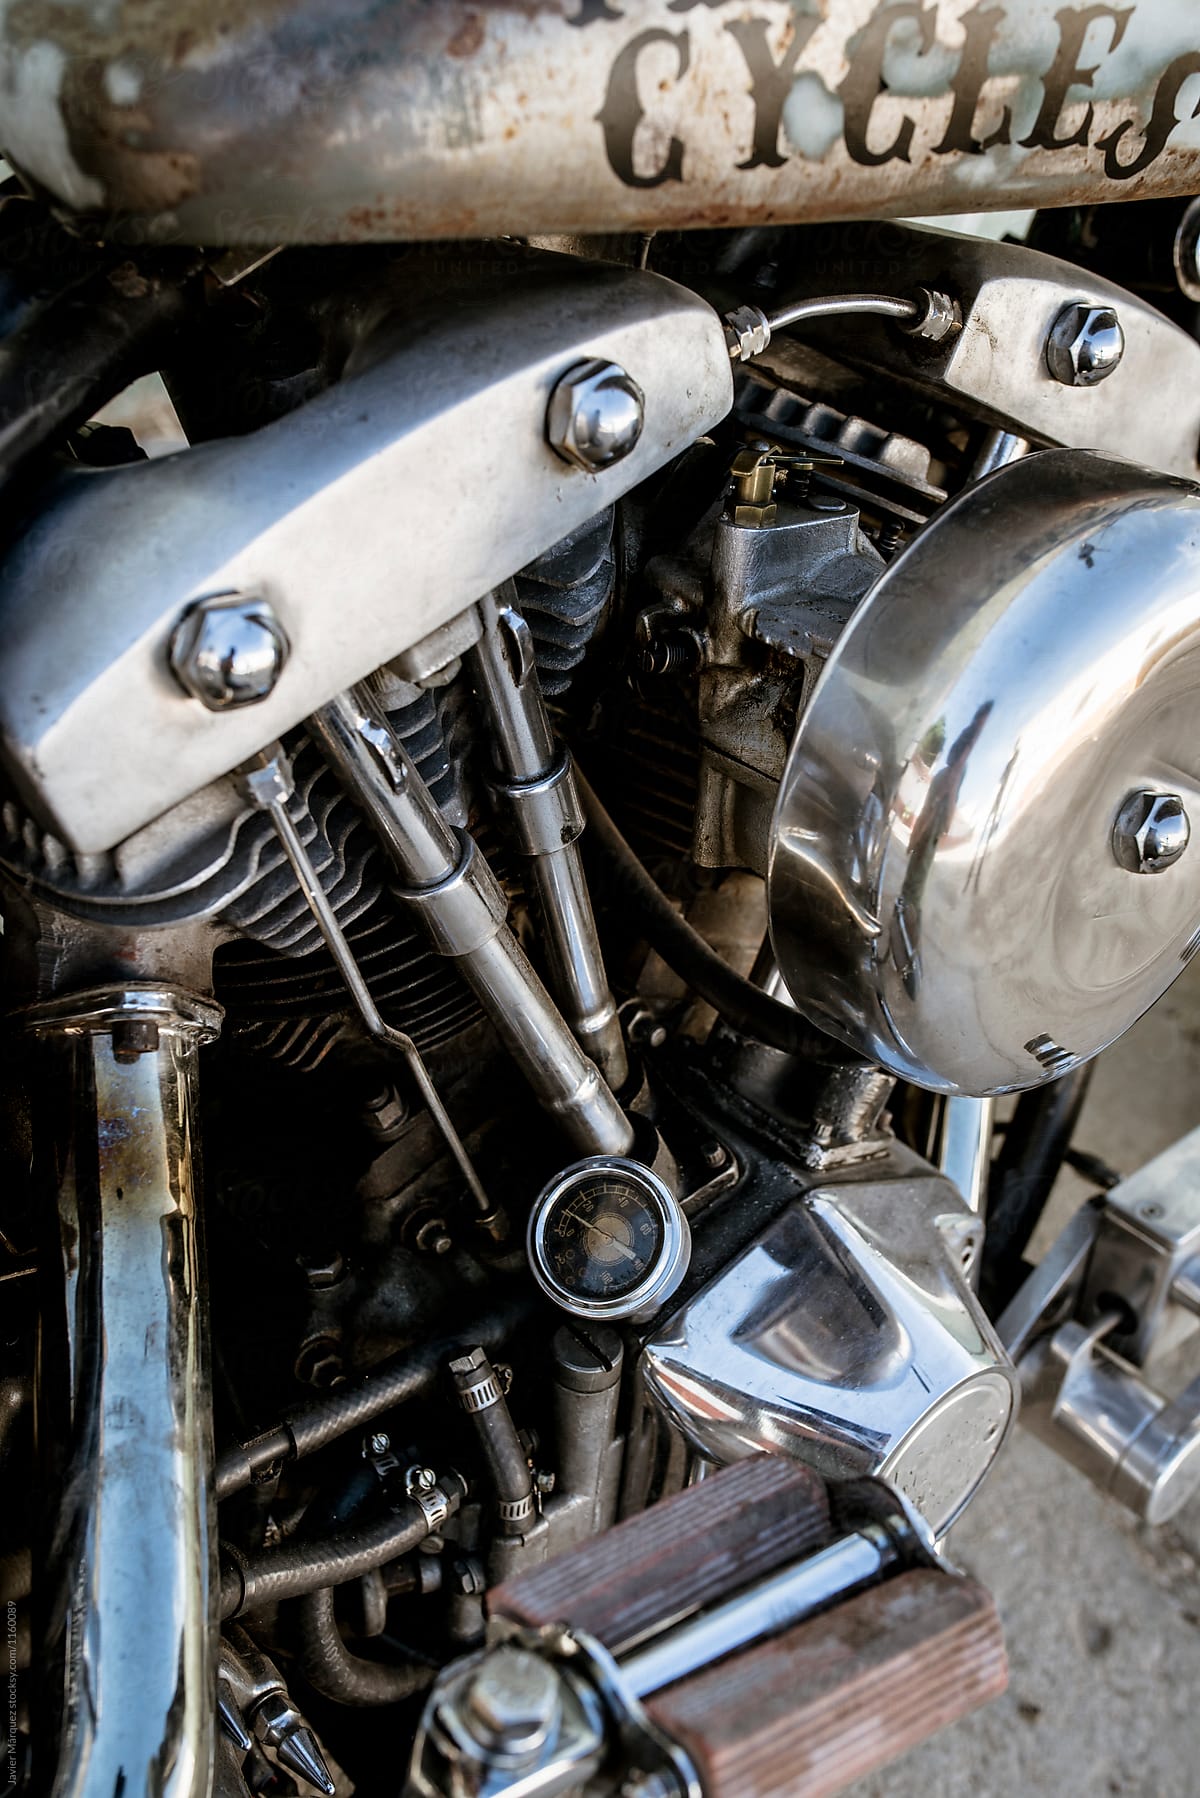 Detail of a vintage motorcycle